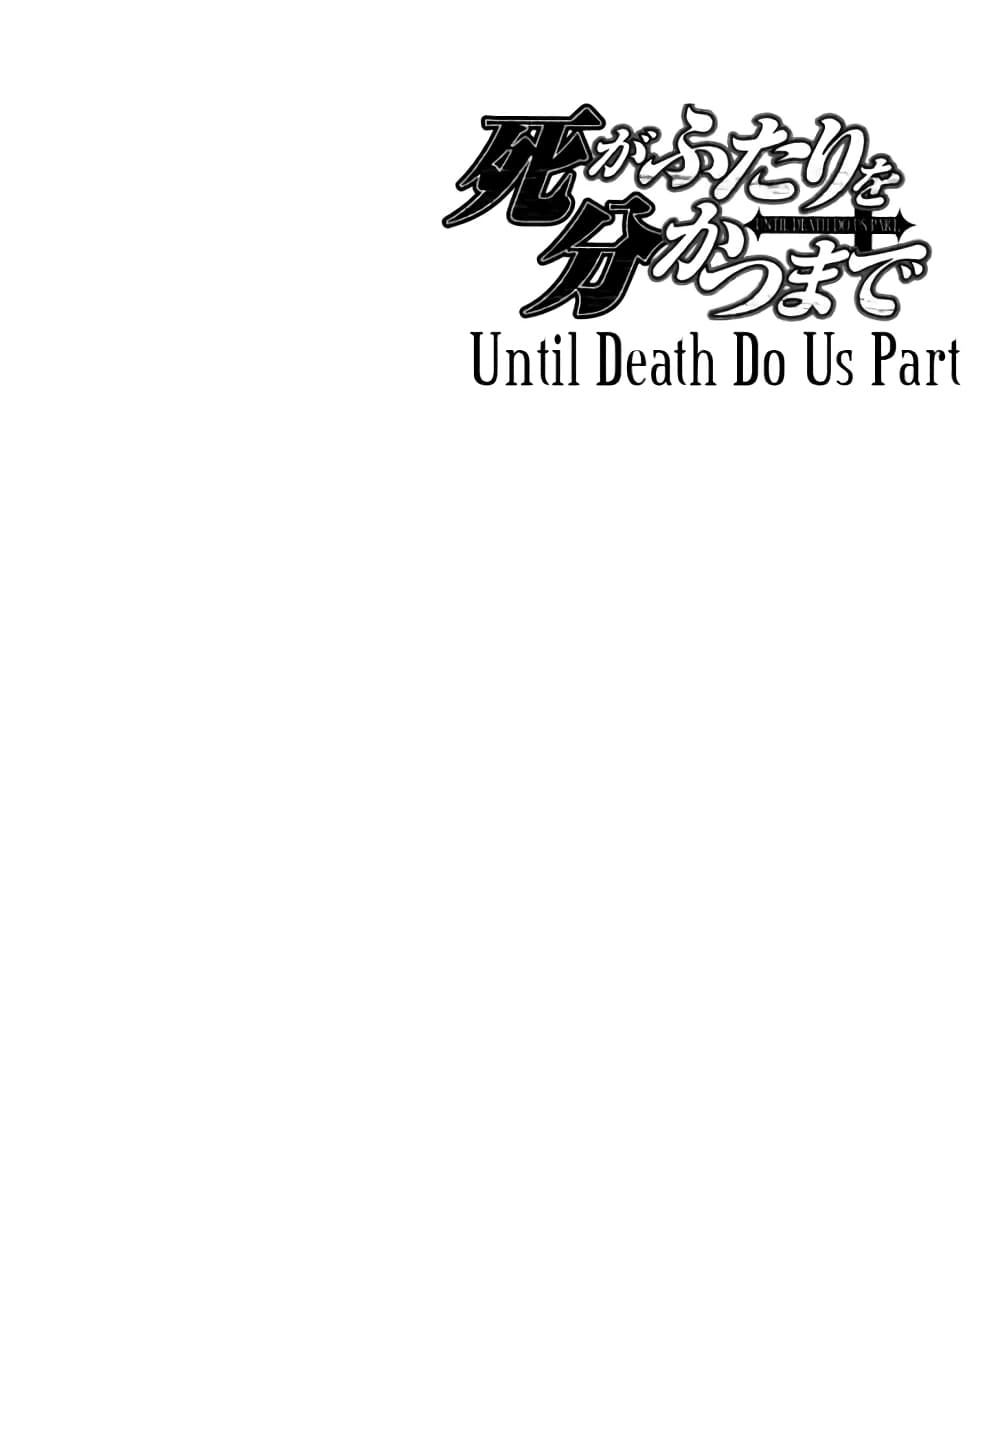 Until Death Do Us 13 (5)